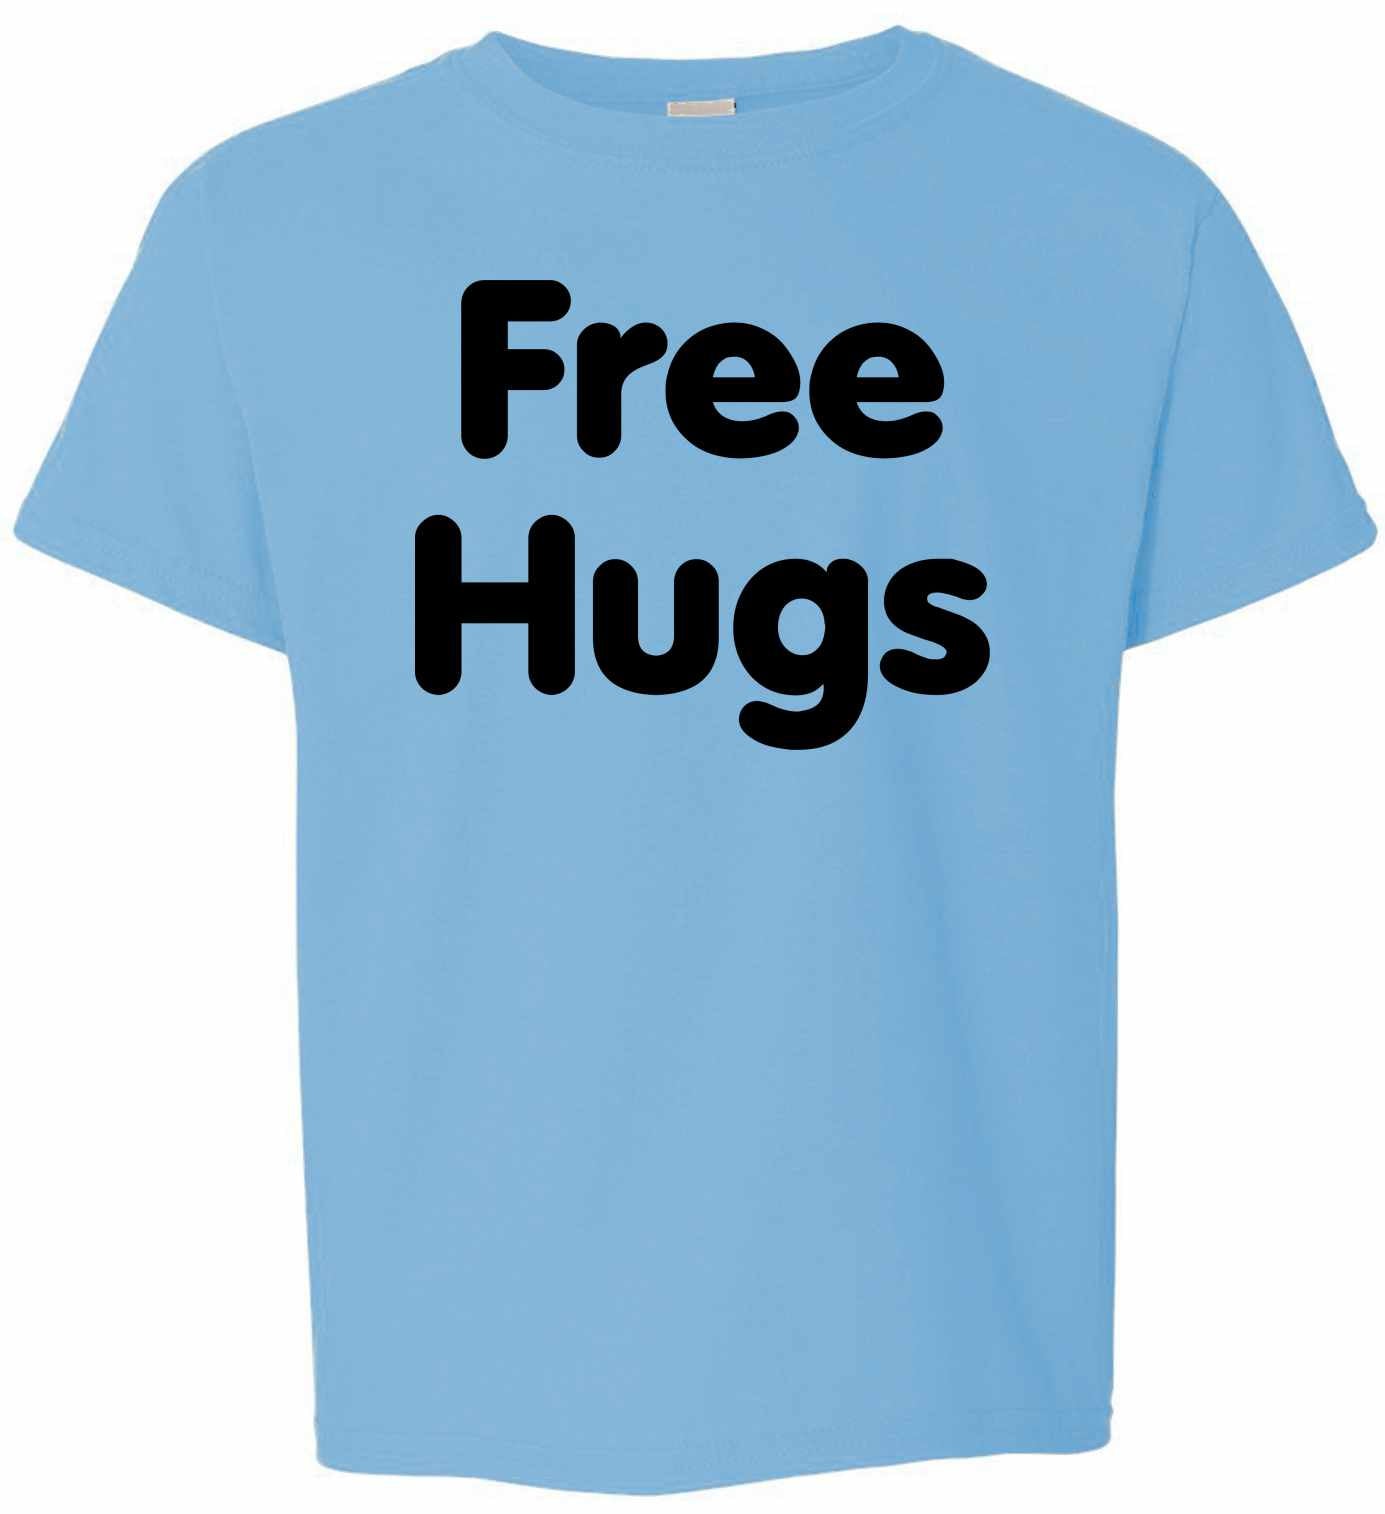 FREE HUGS on Kids T-Shirt (#572-201)